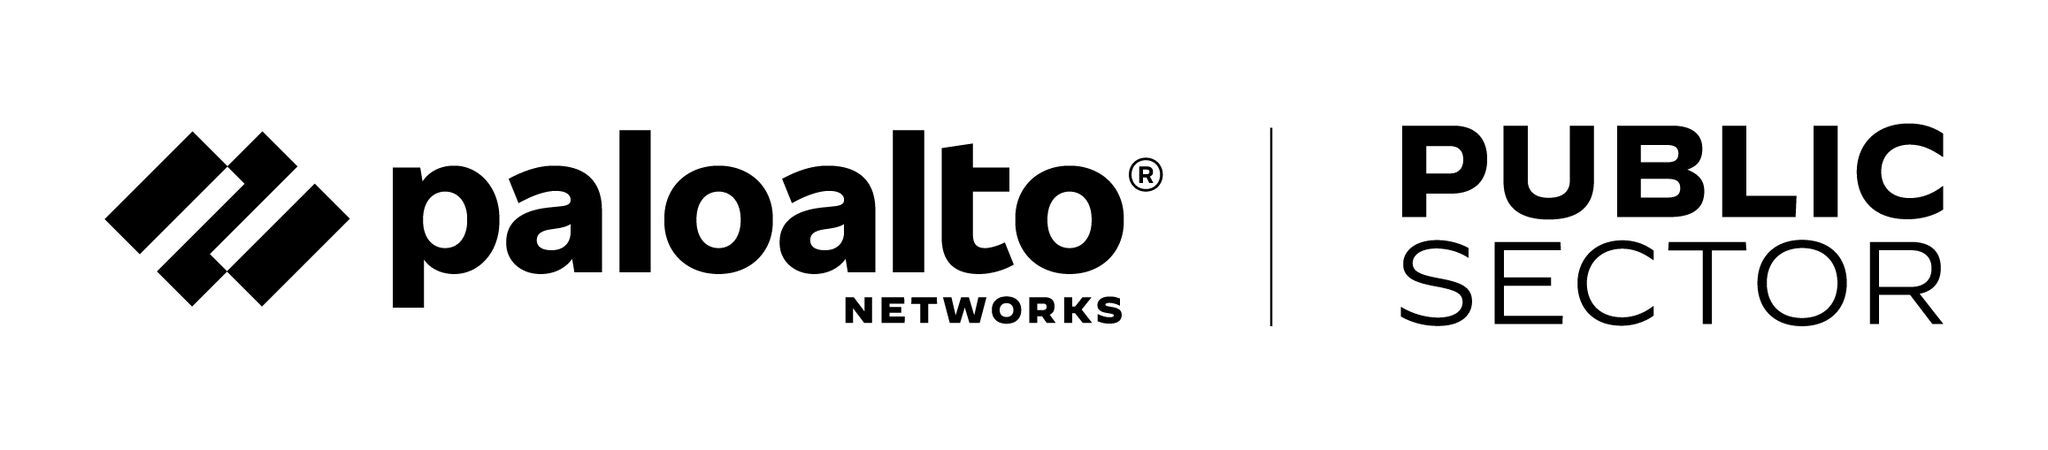 paloalto-publicsector-logo.png